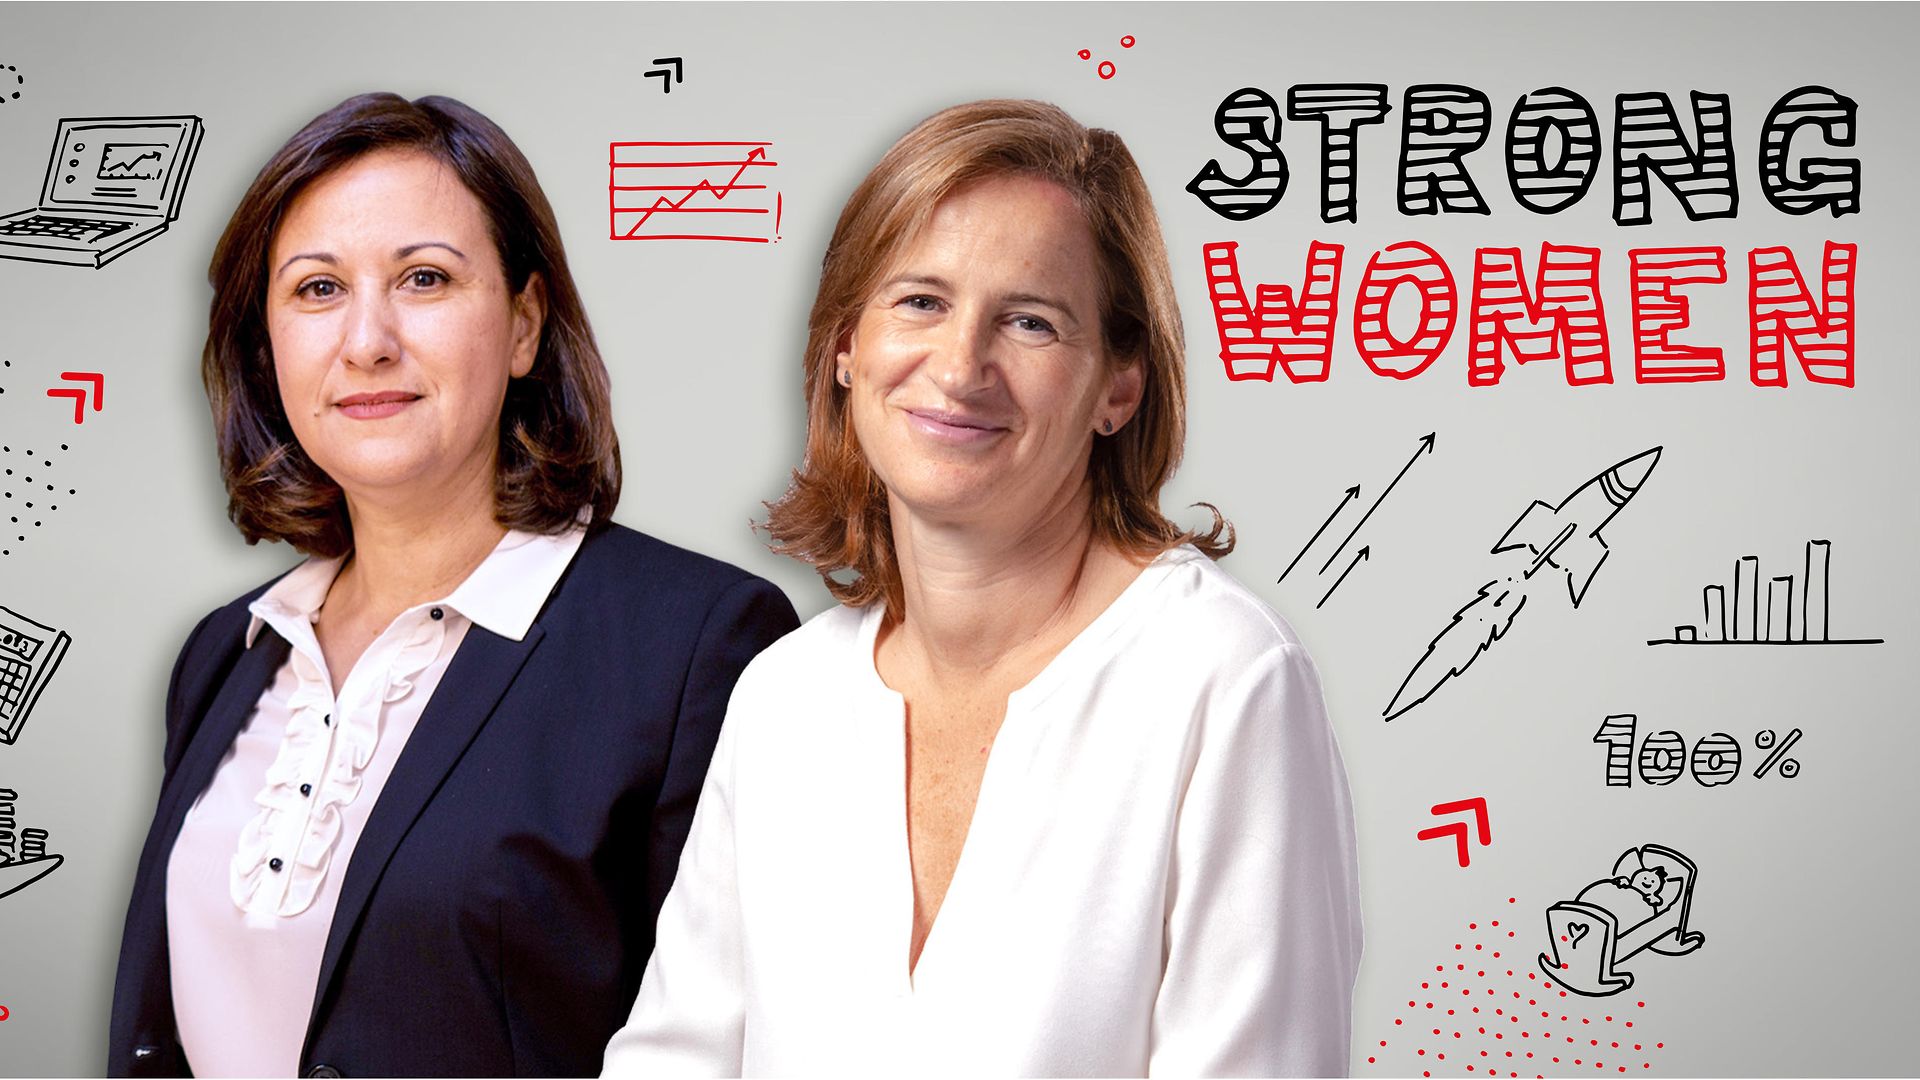 Strong women: Amélie Vidal-Simi and Soulef Karoui 